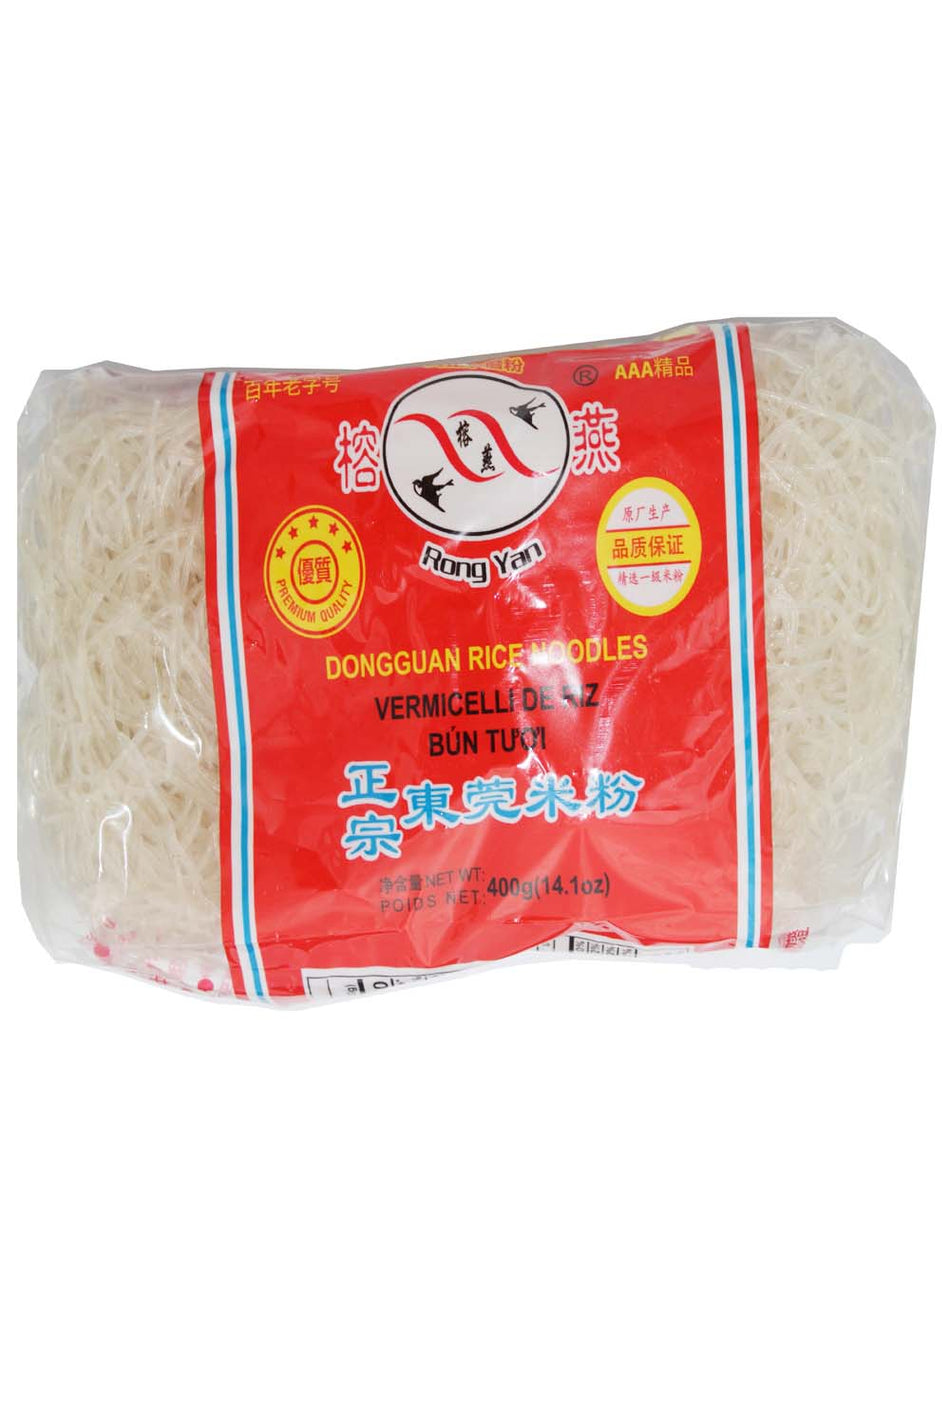 Rong Yan DougGuan  Rice Vermicelli